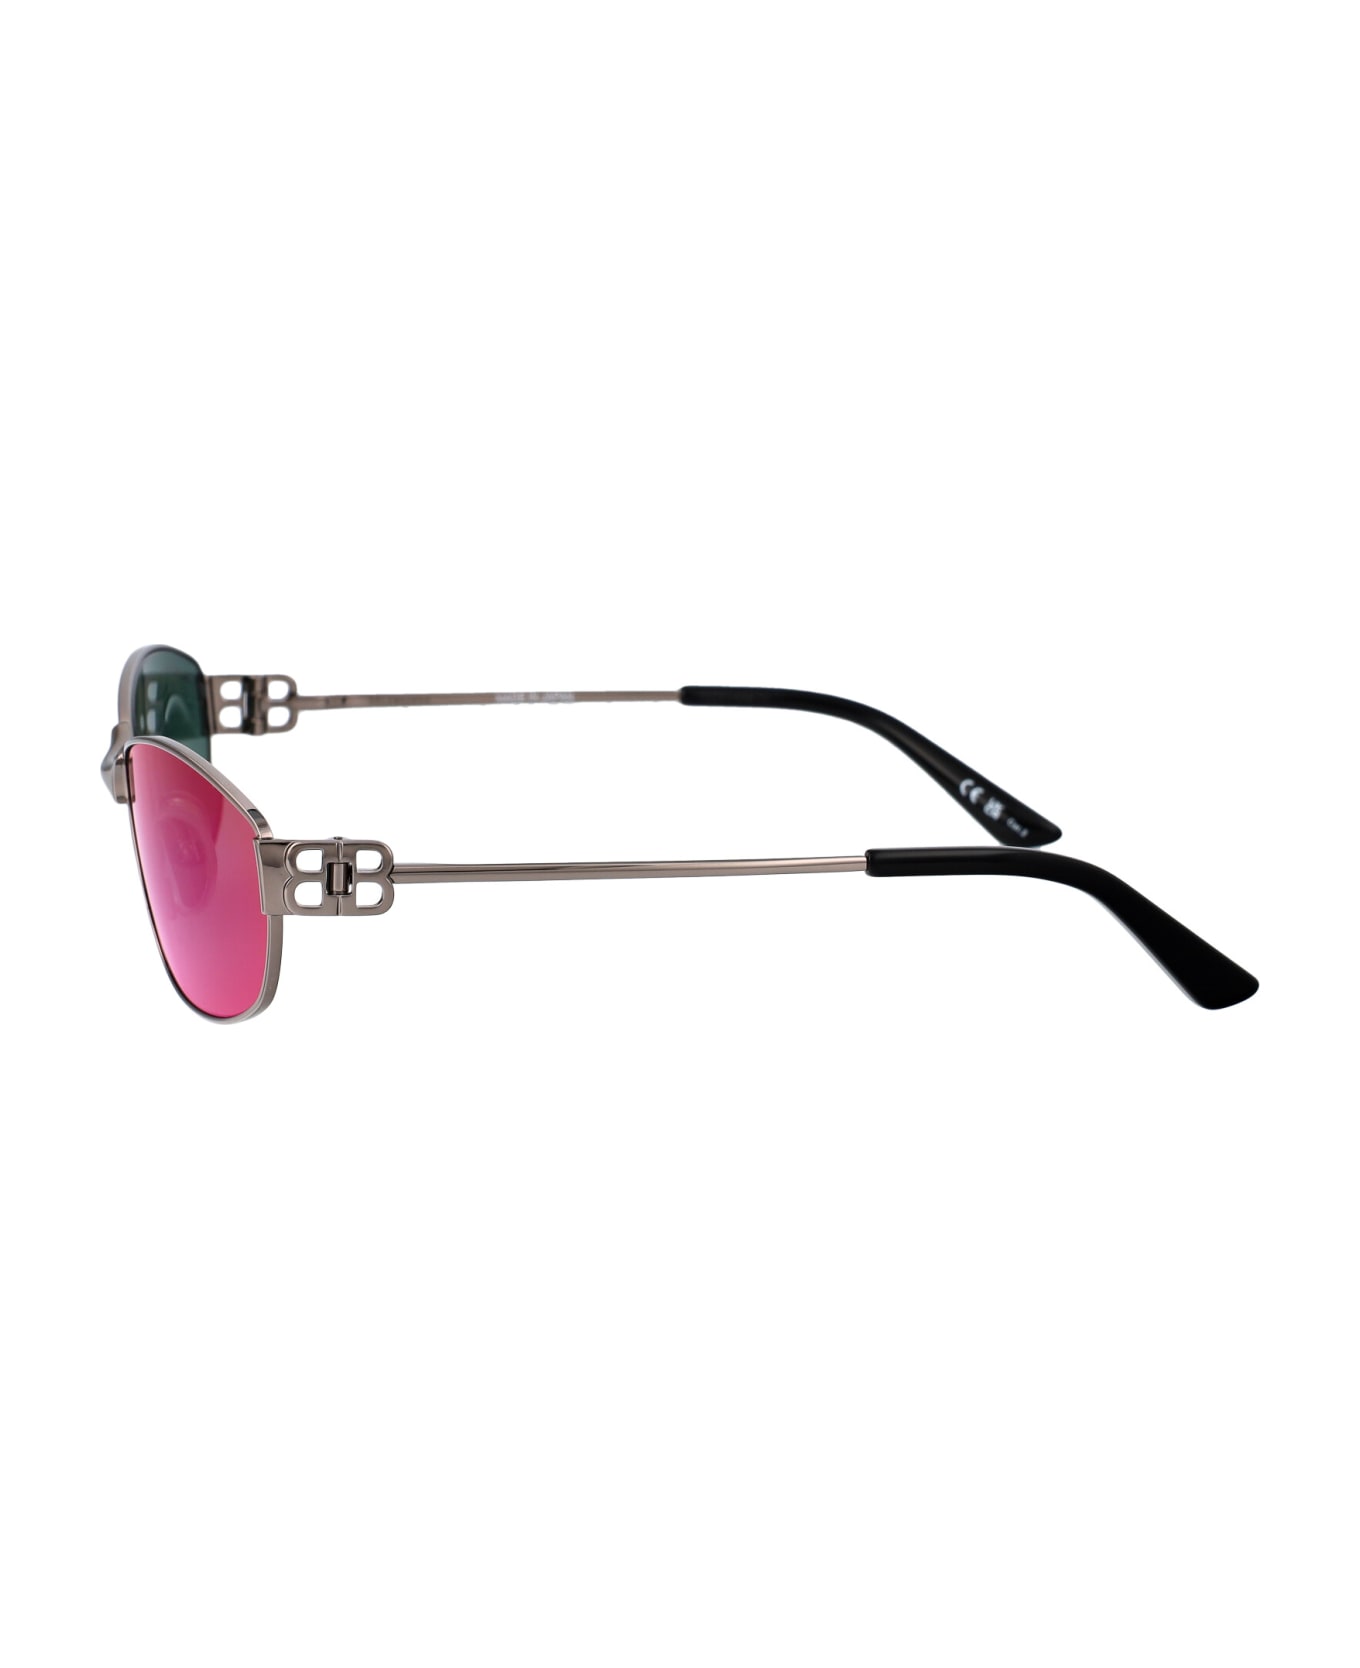 Balenciaga Eyewear Bb0336s Sunglasses - 002 RUTHENIUM RUTHENIUM VIOLET